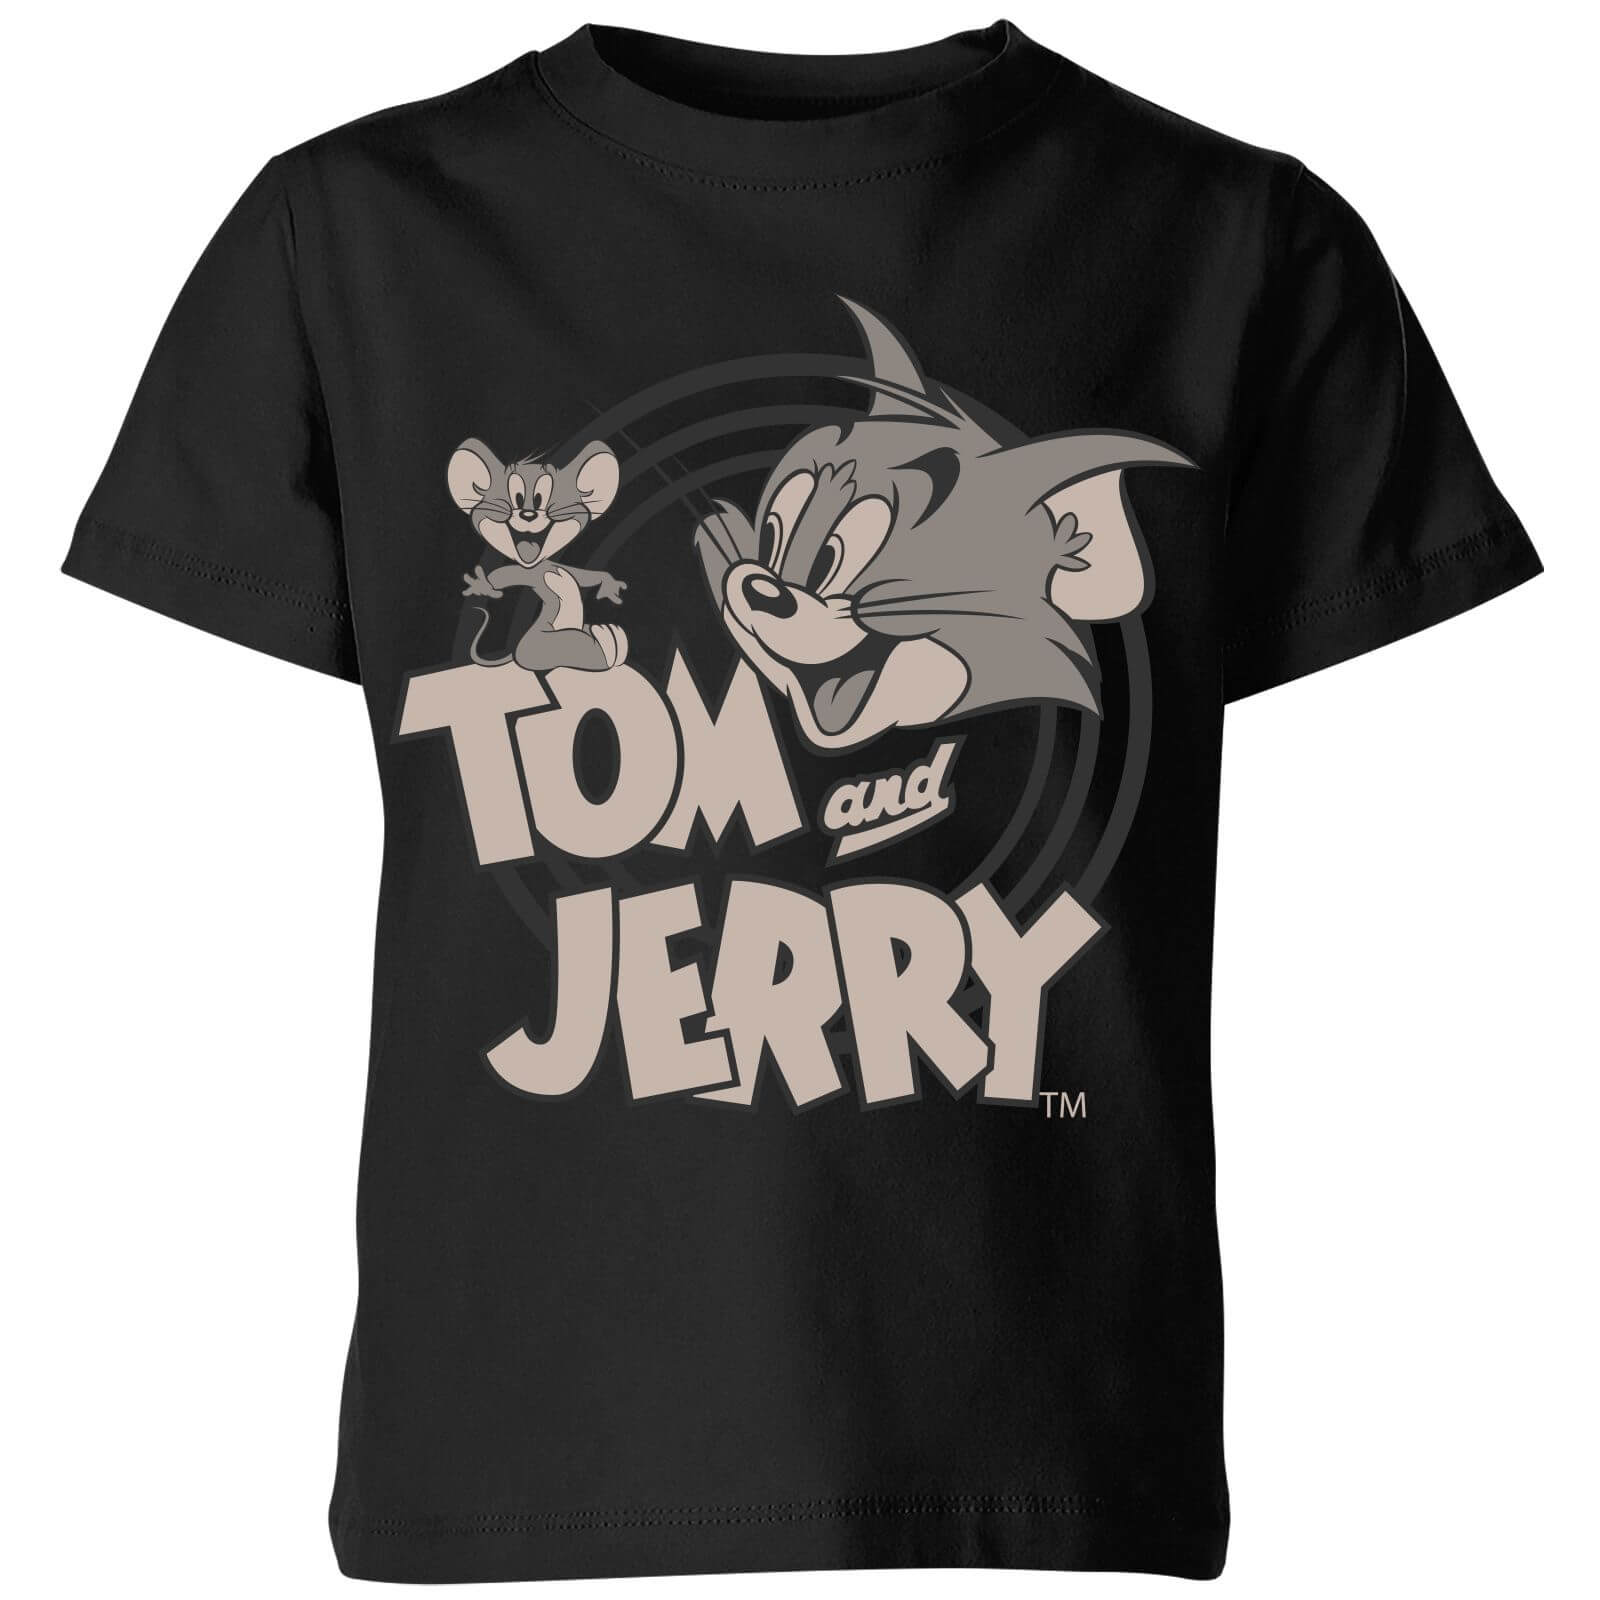 Tom & Jerry Circle Kids' T-Shirt - Black - 9-10 Years